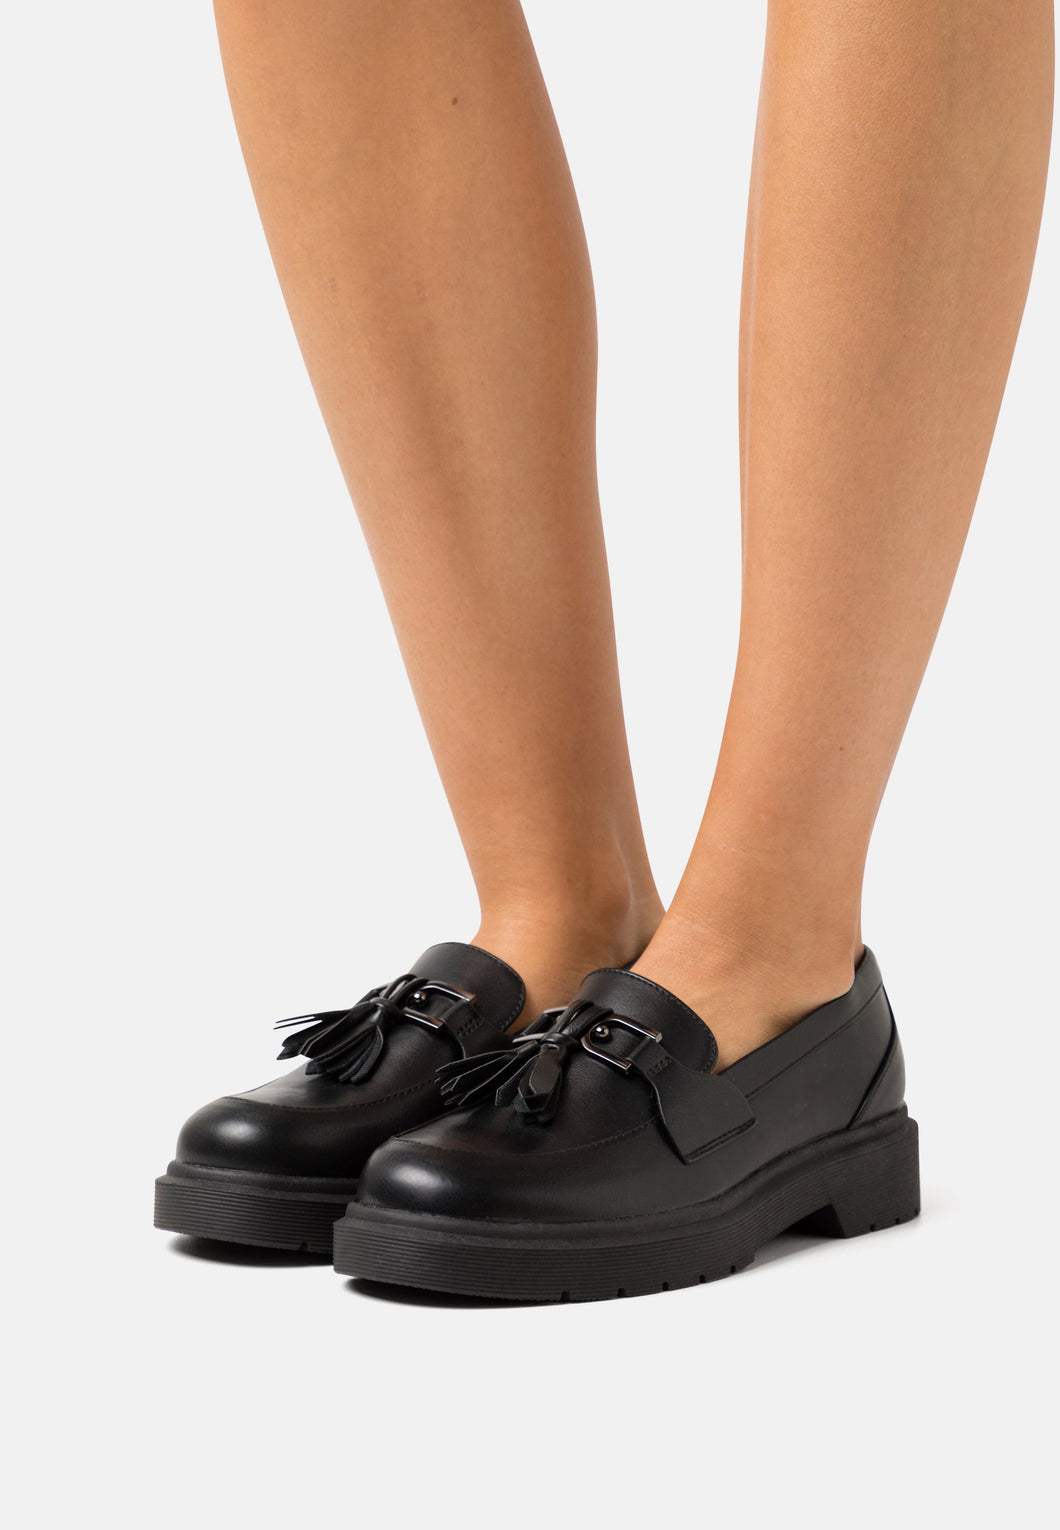 Marta Flats Loafers Slip On Shoes Black